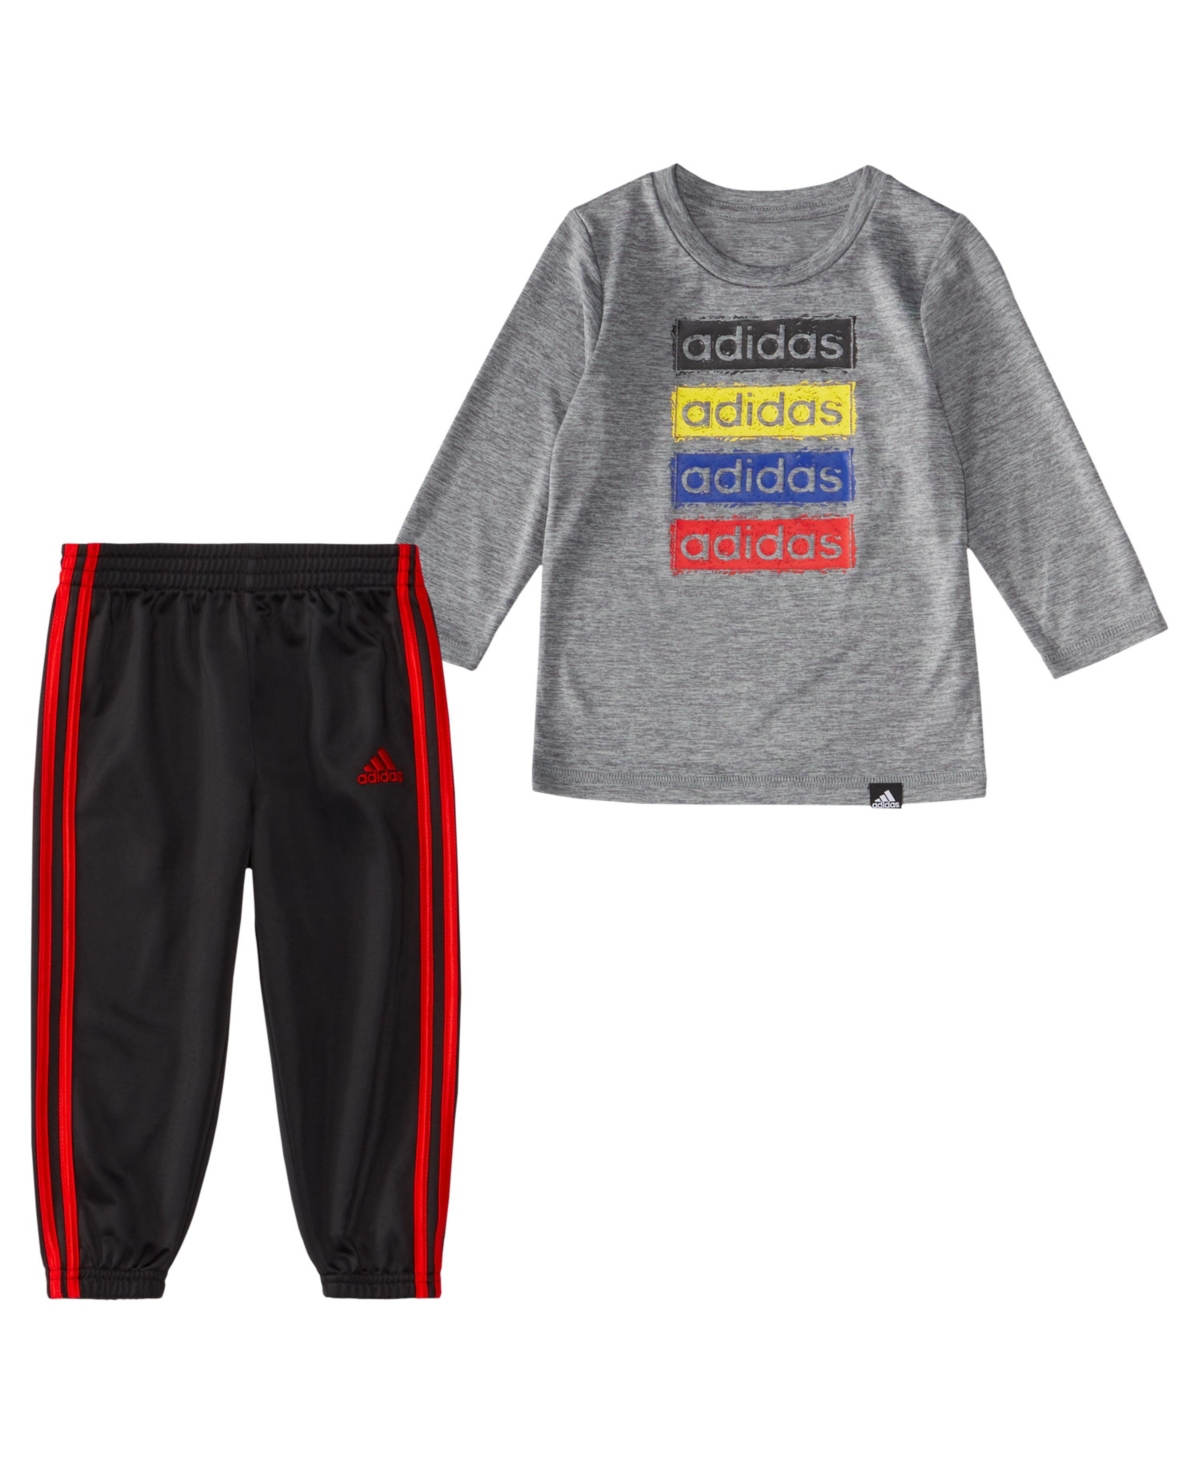 adidas Baby Boys Long Sleeve T-shirt and Joggers, 2 Piece Set